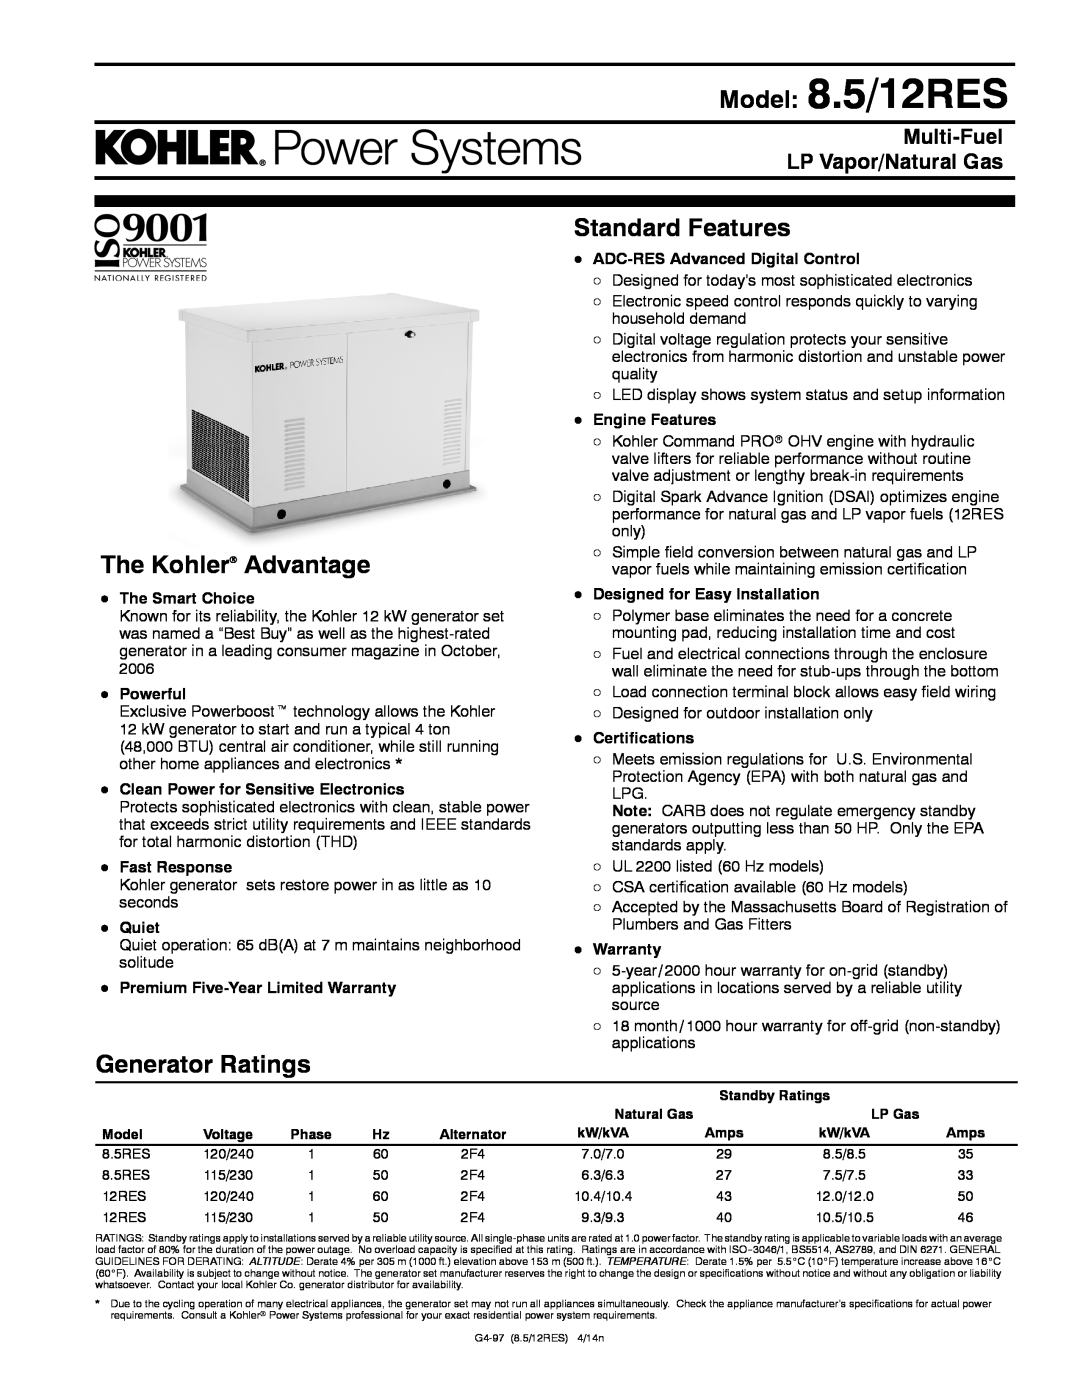 Kohler warranty Model 8.5/12RES, The Kohlerr Advantage, Generator Ratings, Standard Features 